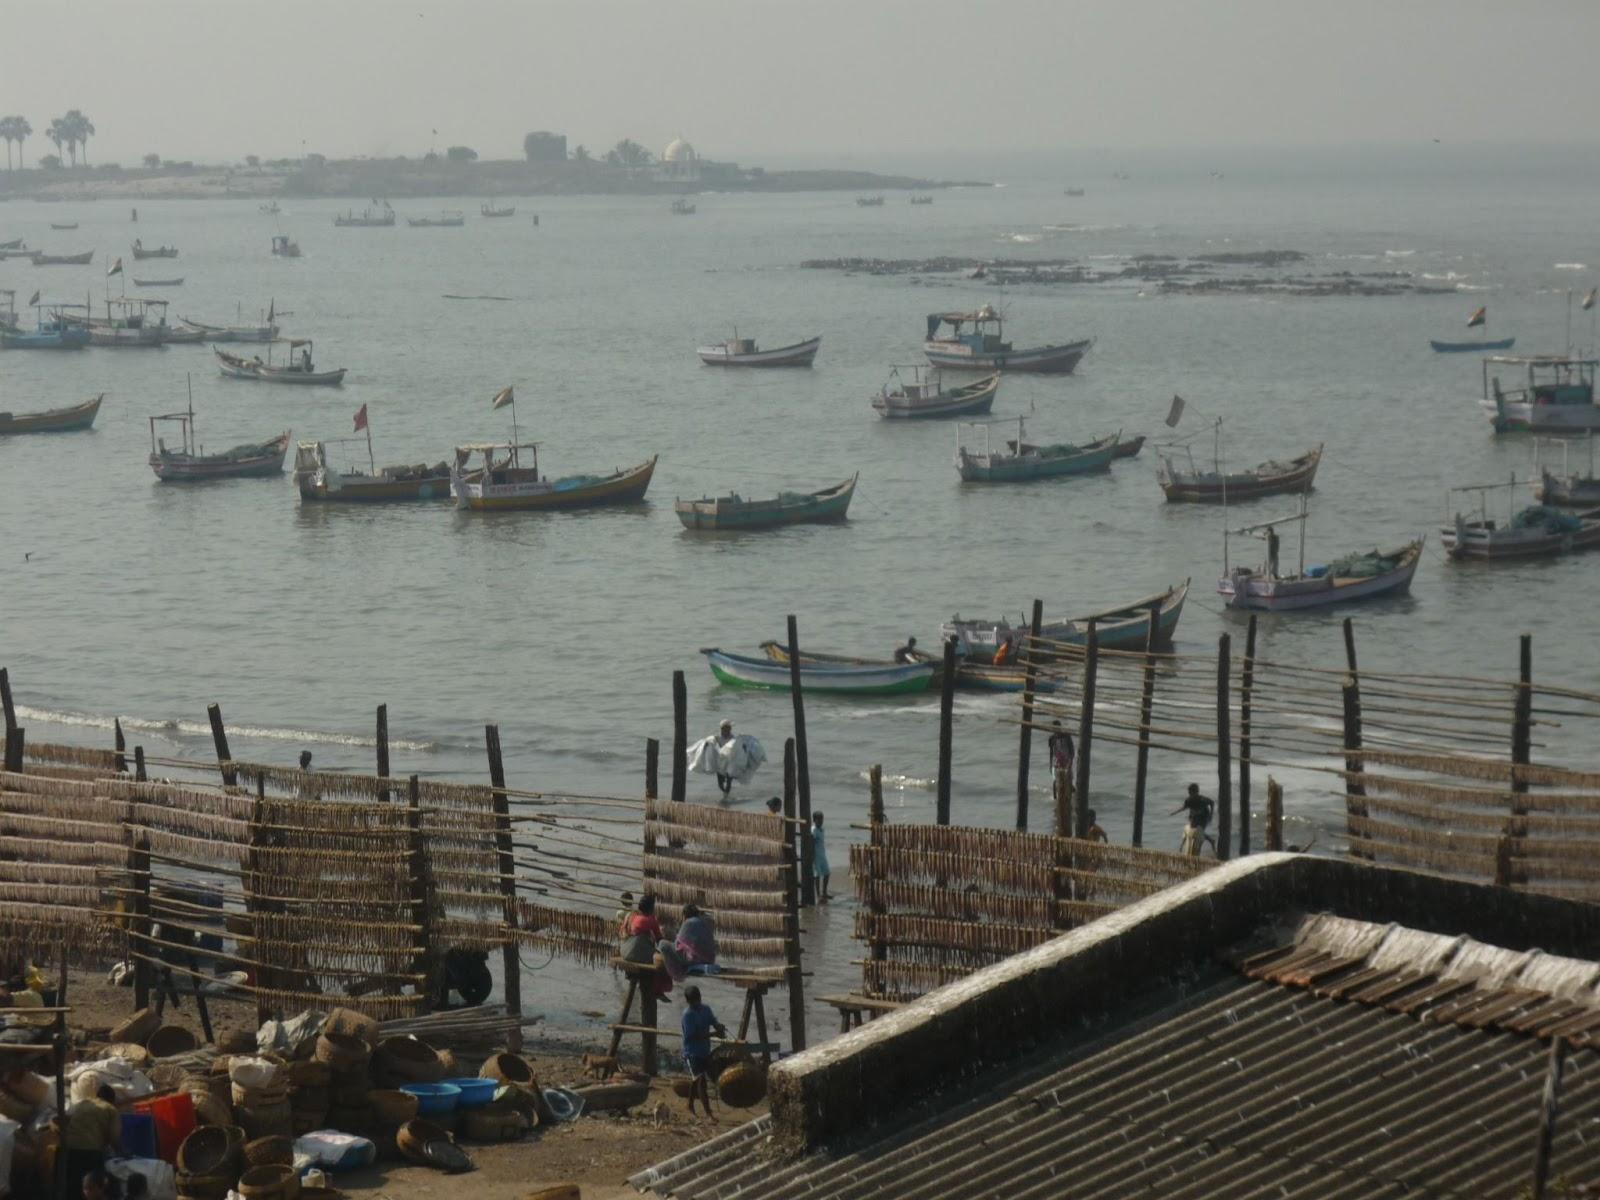 Madh Fishing Village, Bombay Suburbs. Apoorva Iyengar, 2012. 